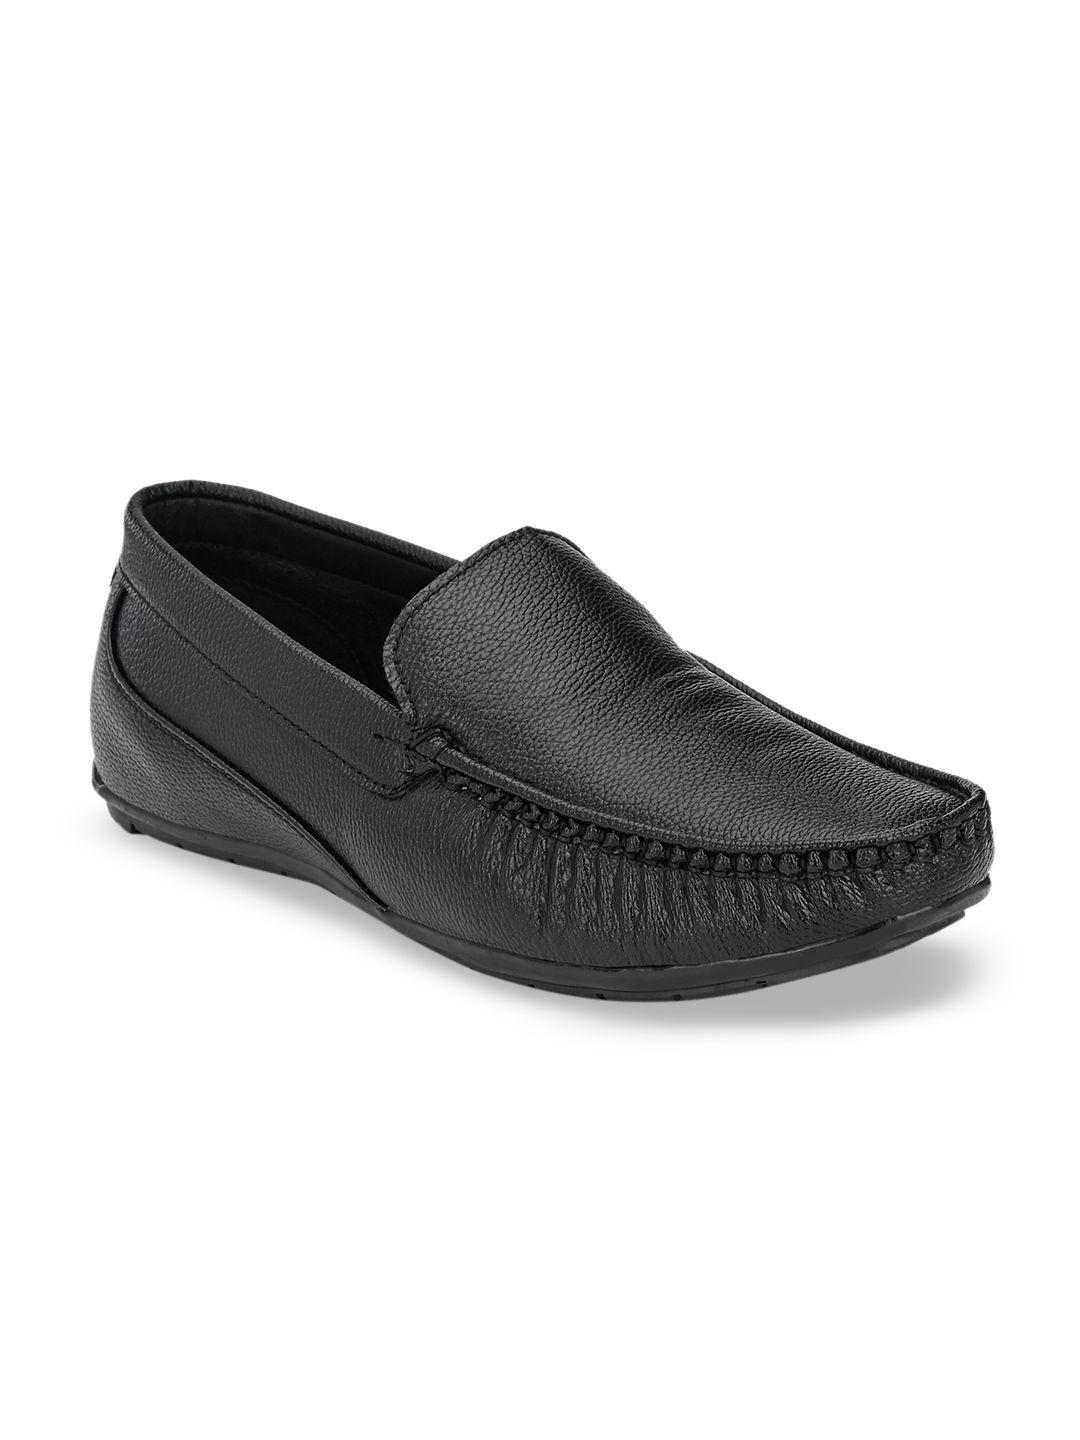 hirels men black loafers